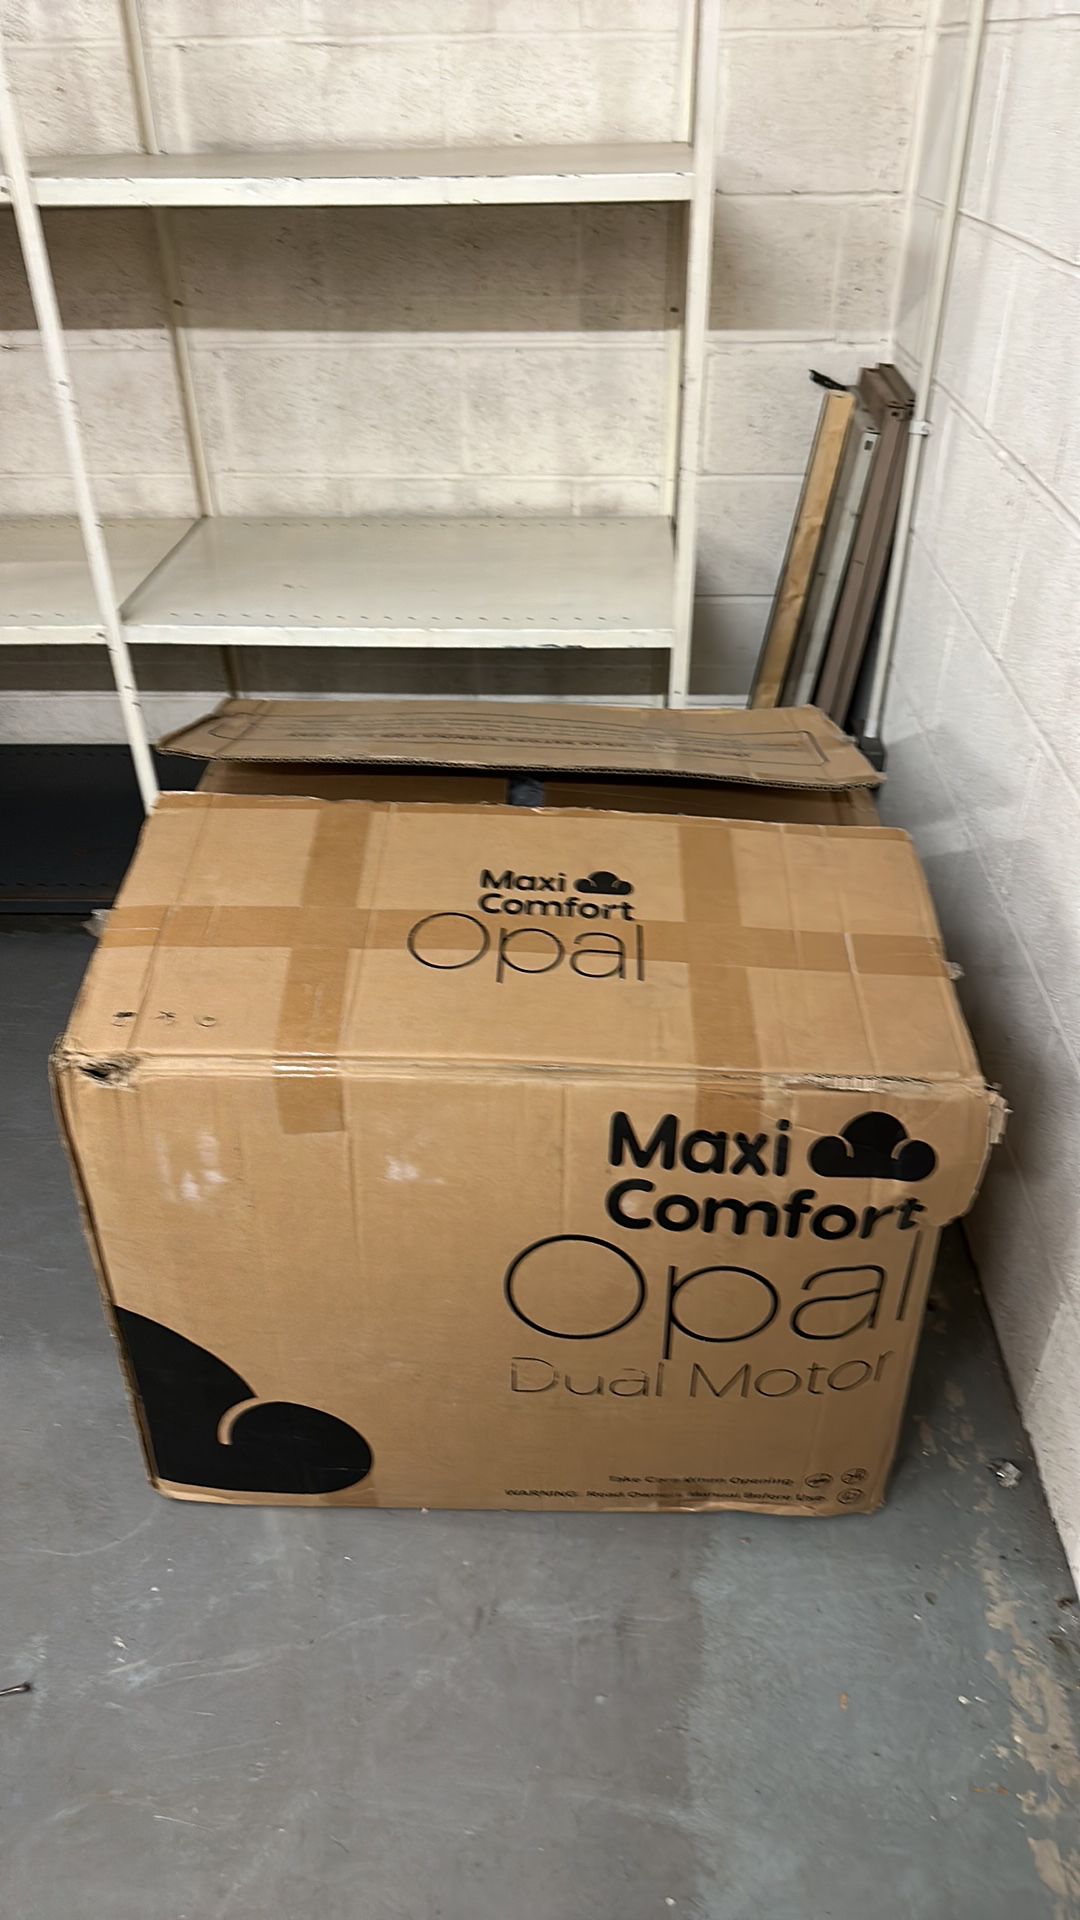 MAXI Comfort Opal - Dual Motor - Image 5 of 7